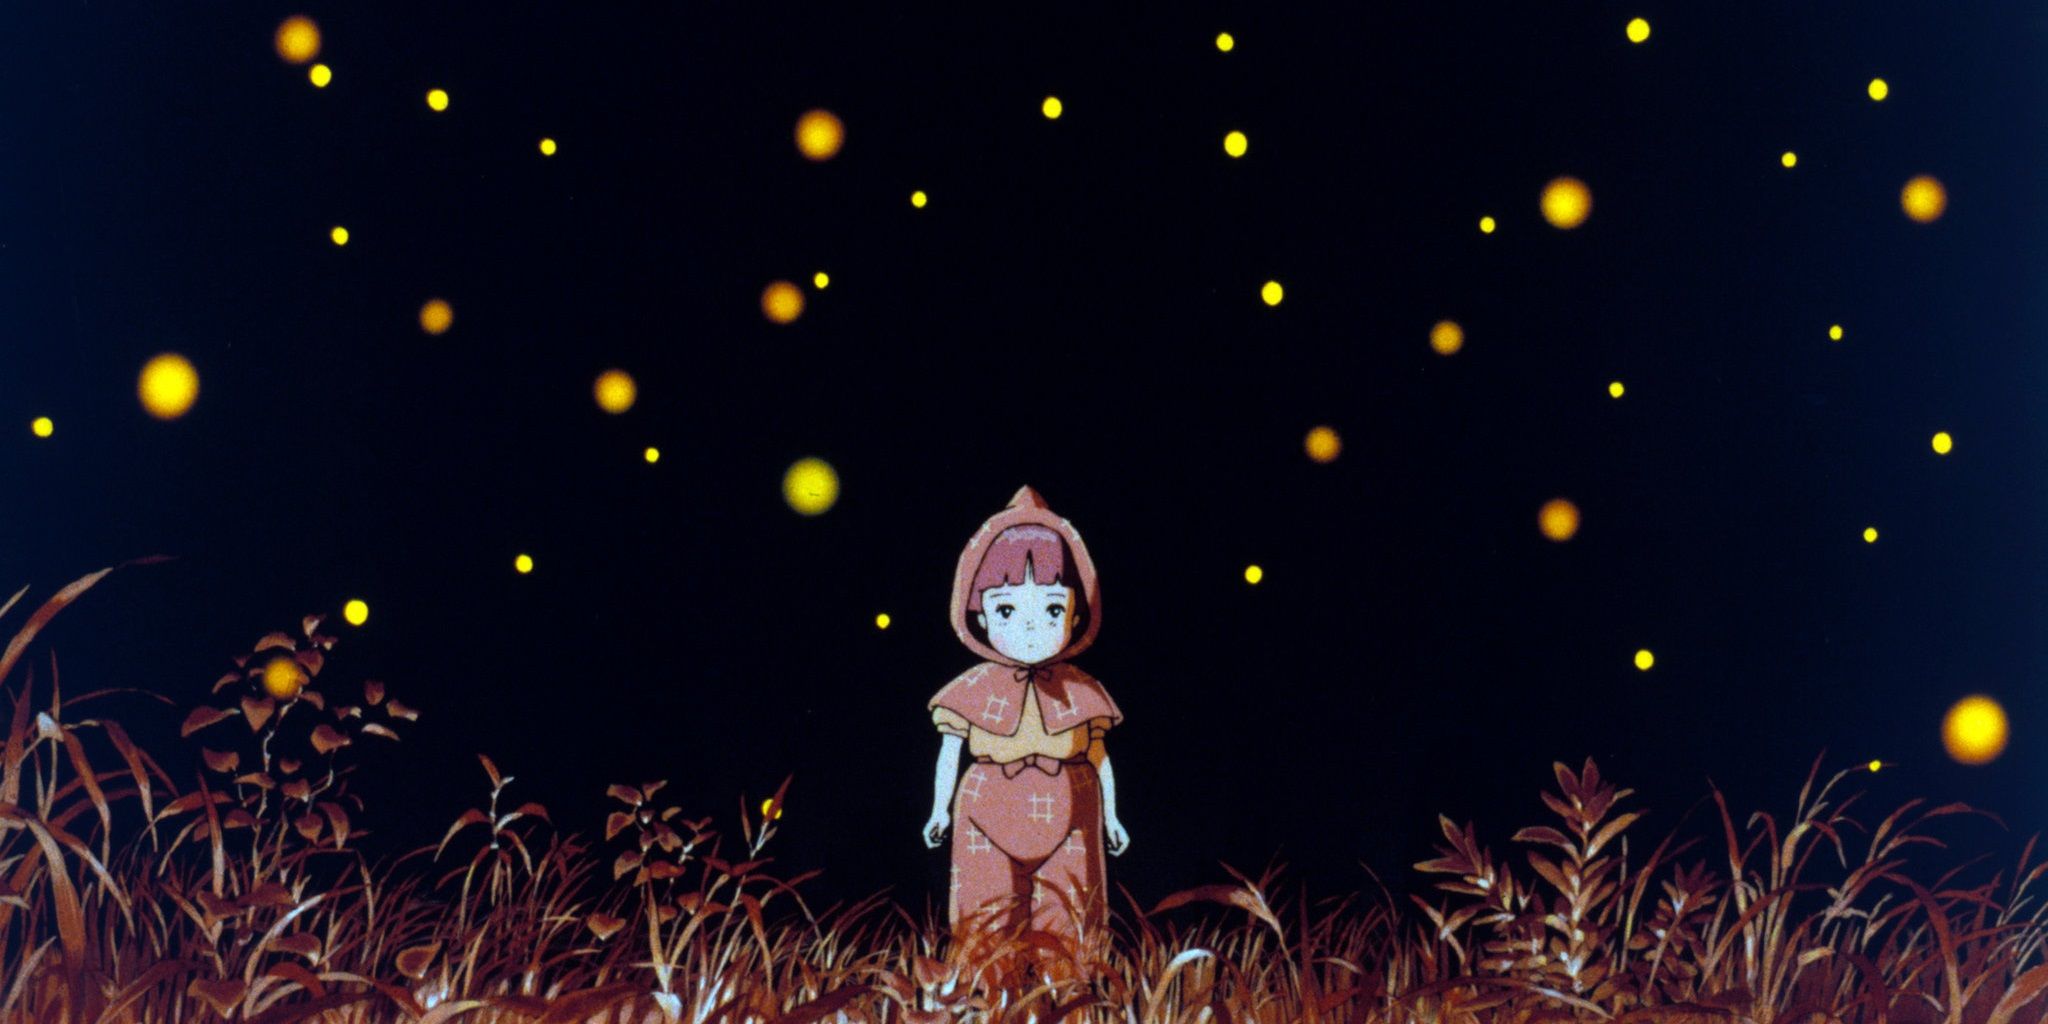 Setsuko em pé entre os vaga-lumes no Túmulo dos Vagalumes